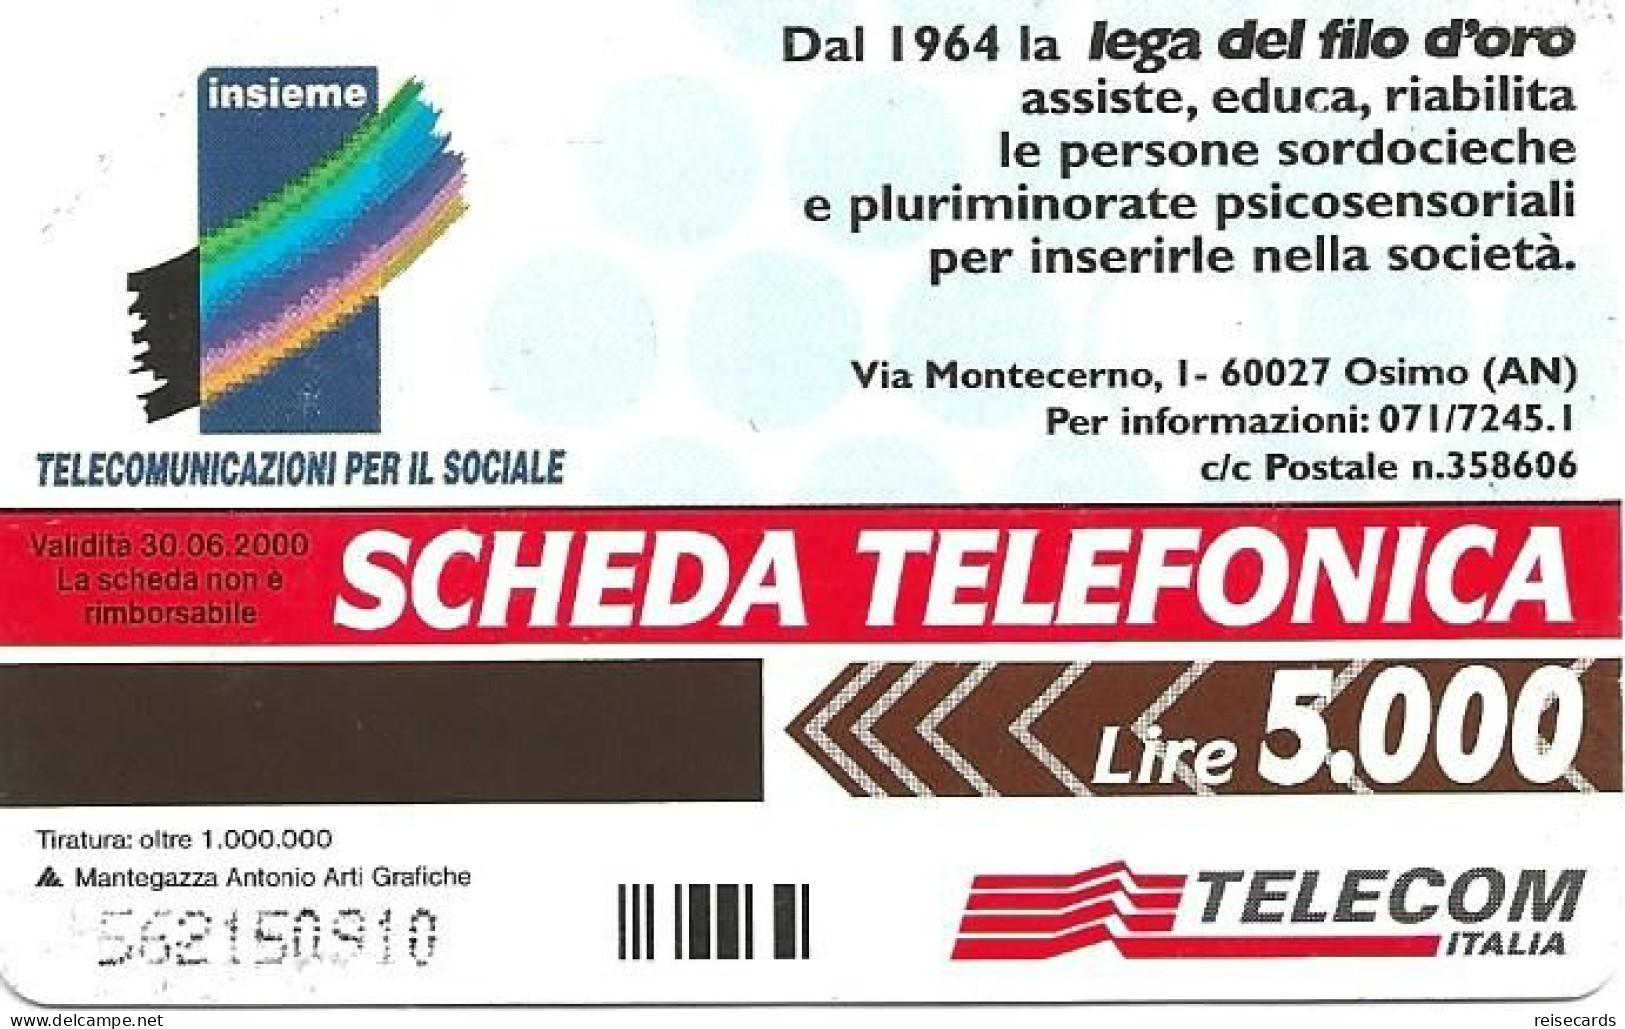 Italy: Telecom Italia - Lega Del Filo D'oro - Publiques Publicitaires